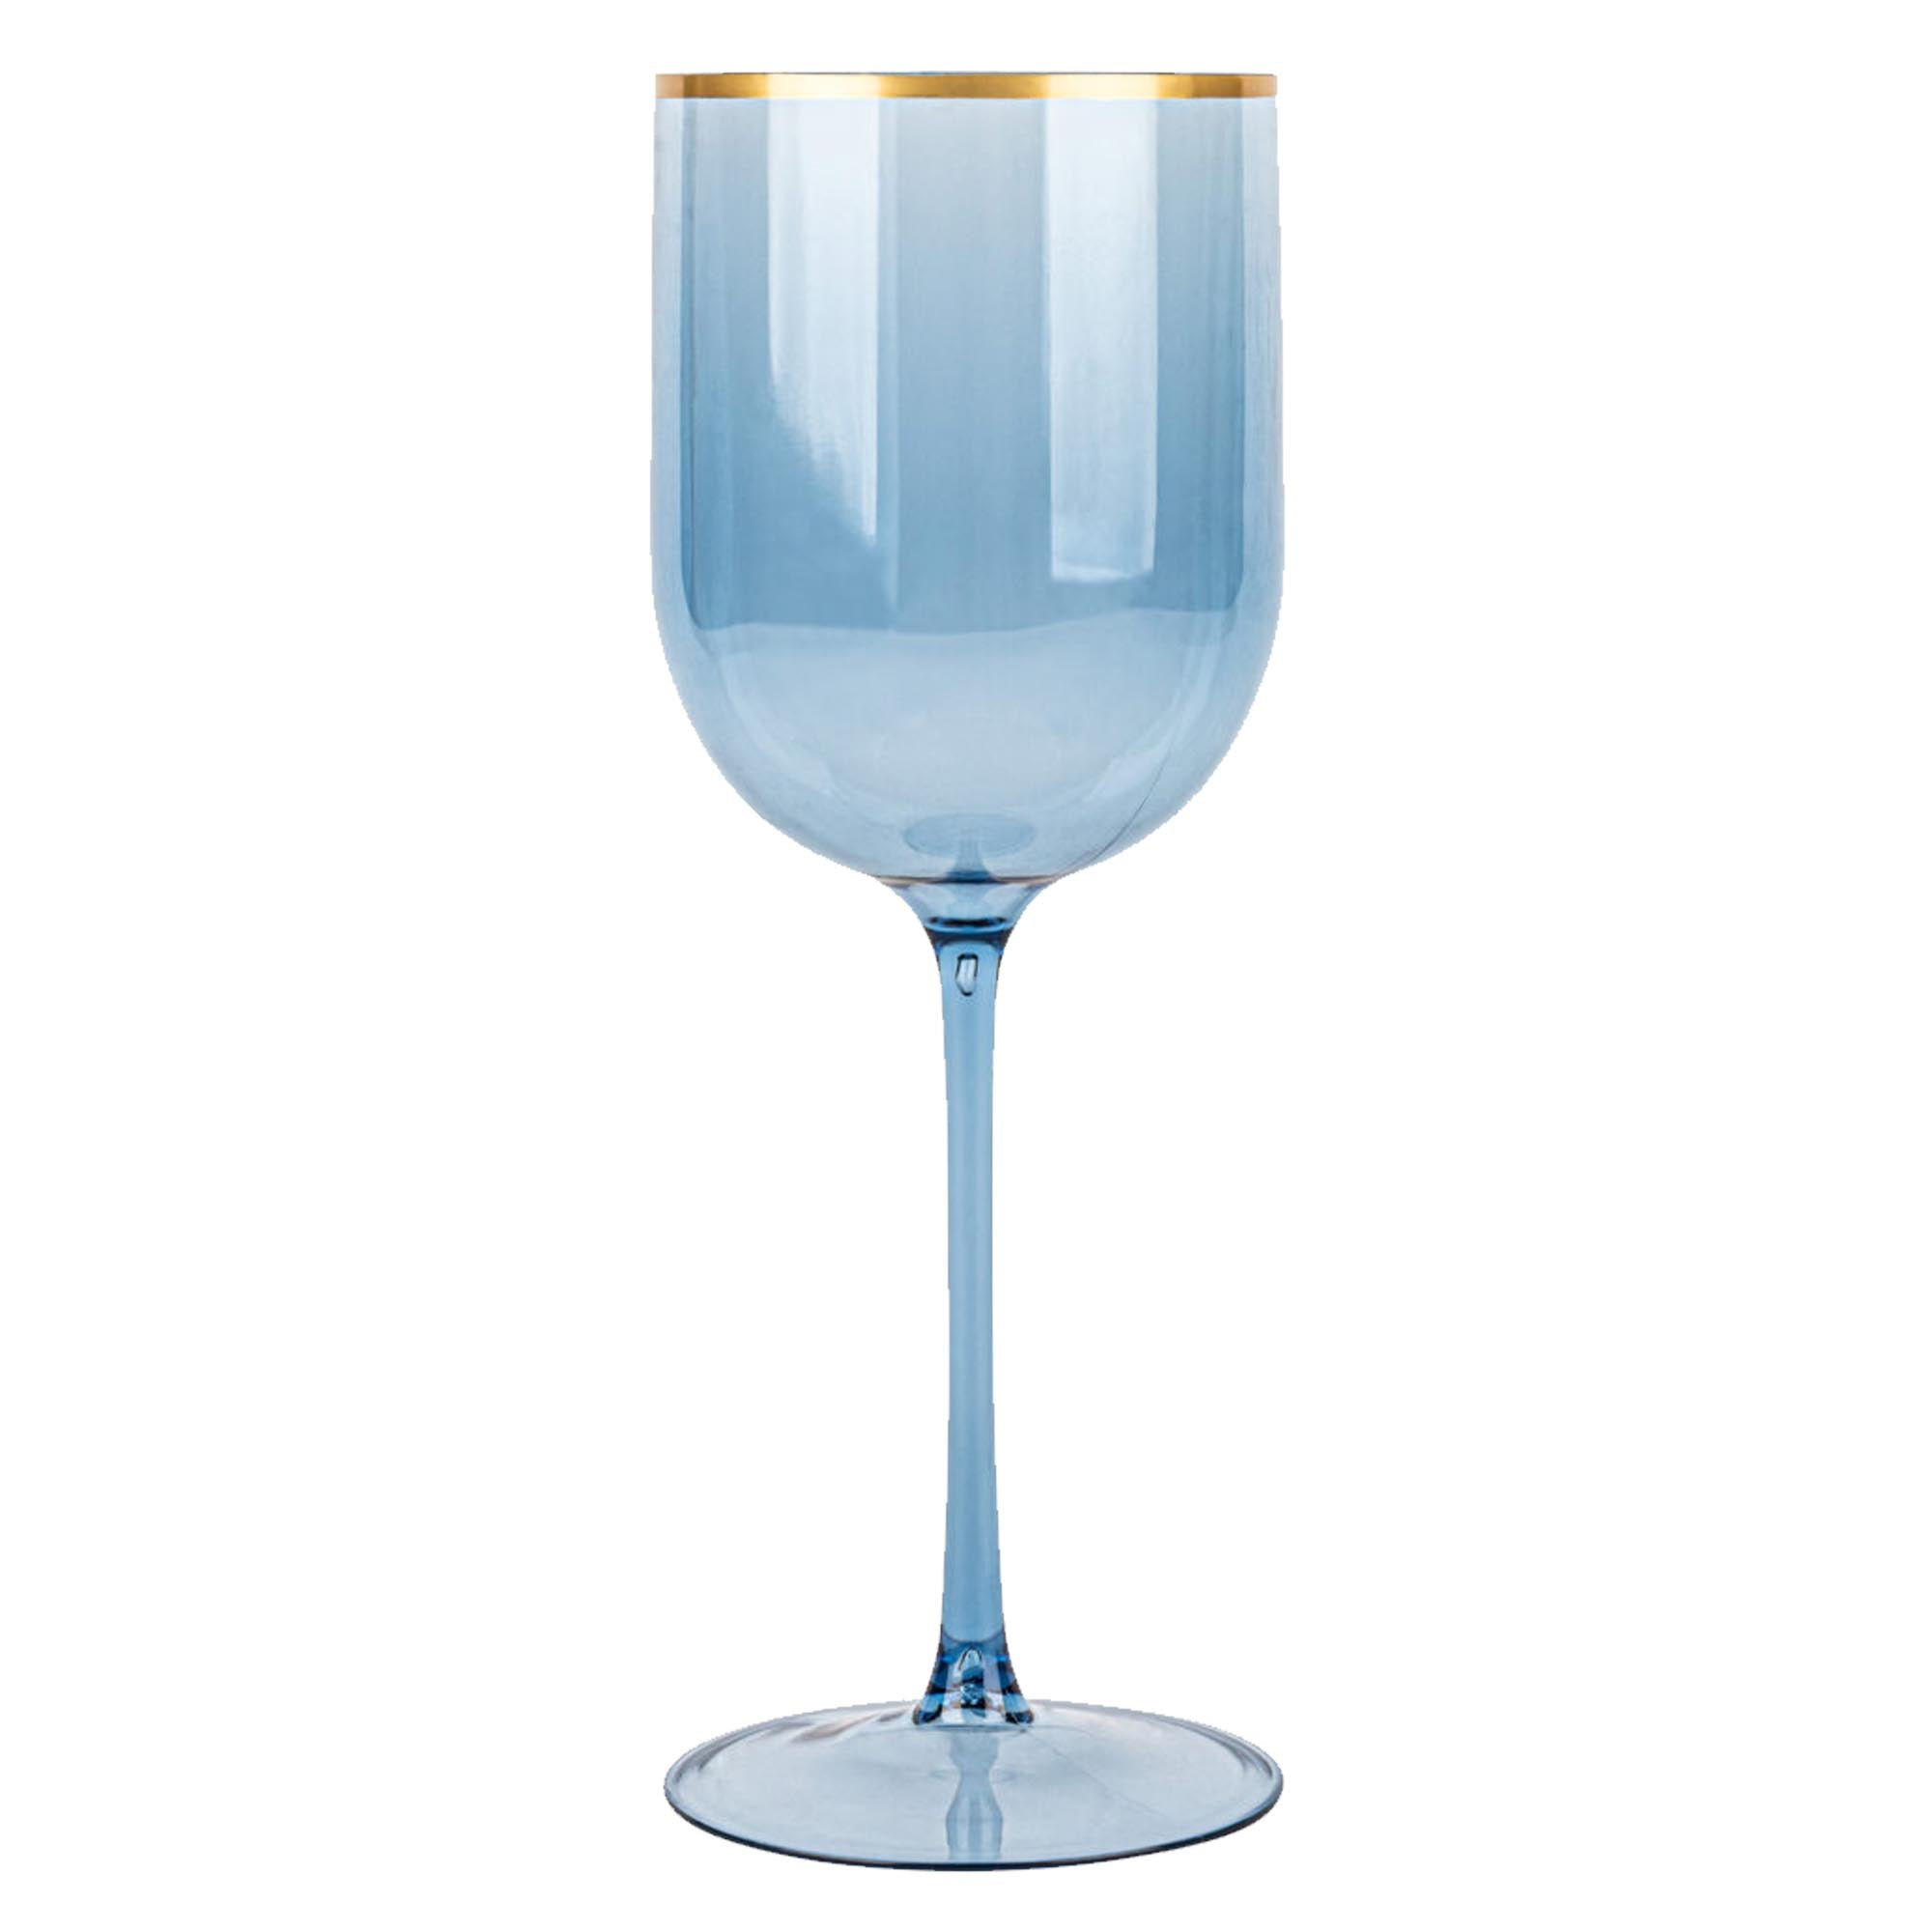 48 Glasses, 8 oz. Crystal Disposable Plastic Champagne Flutes